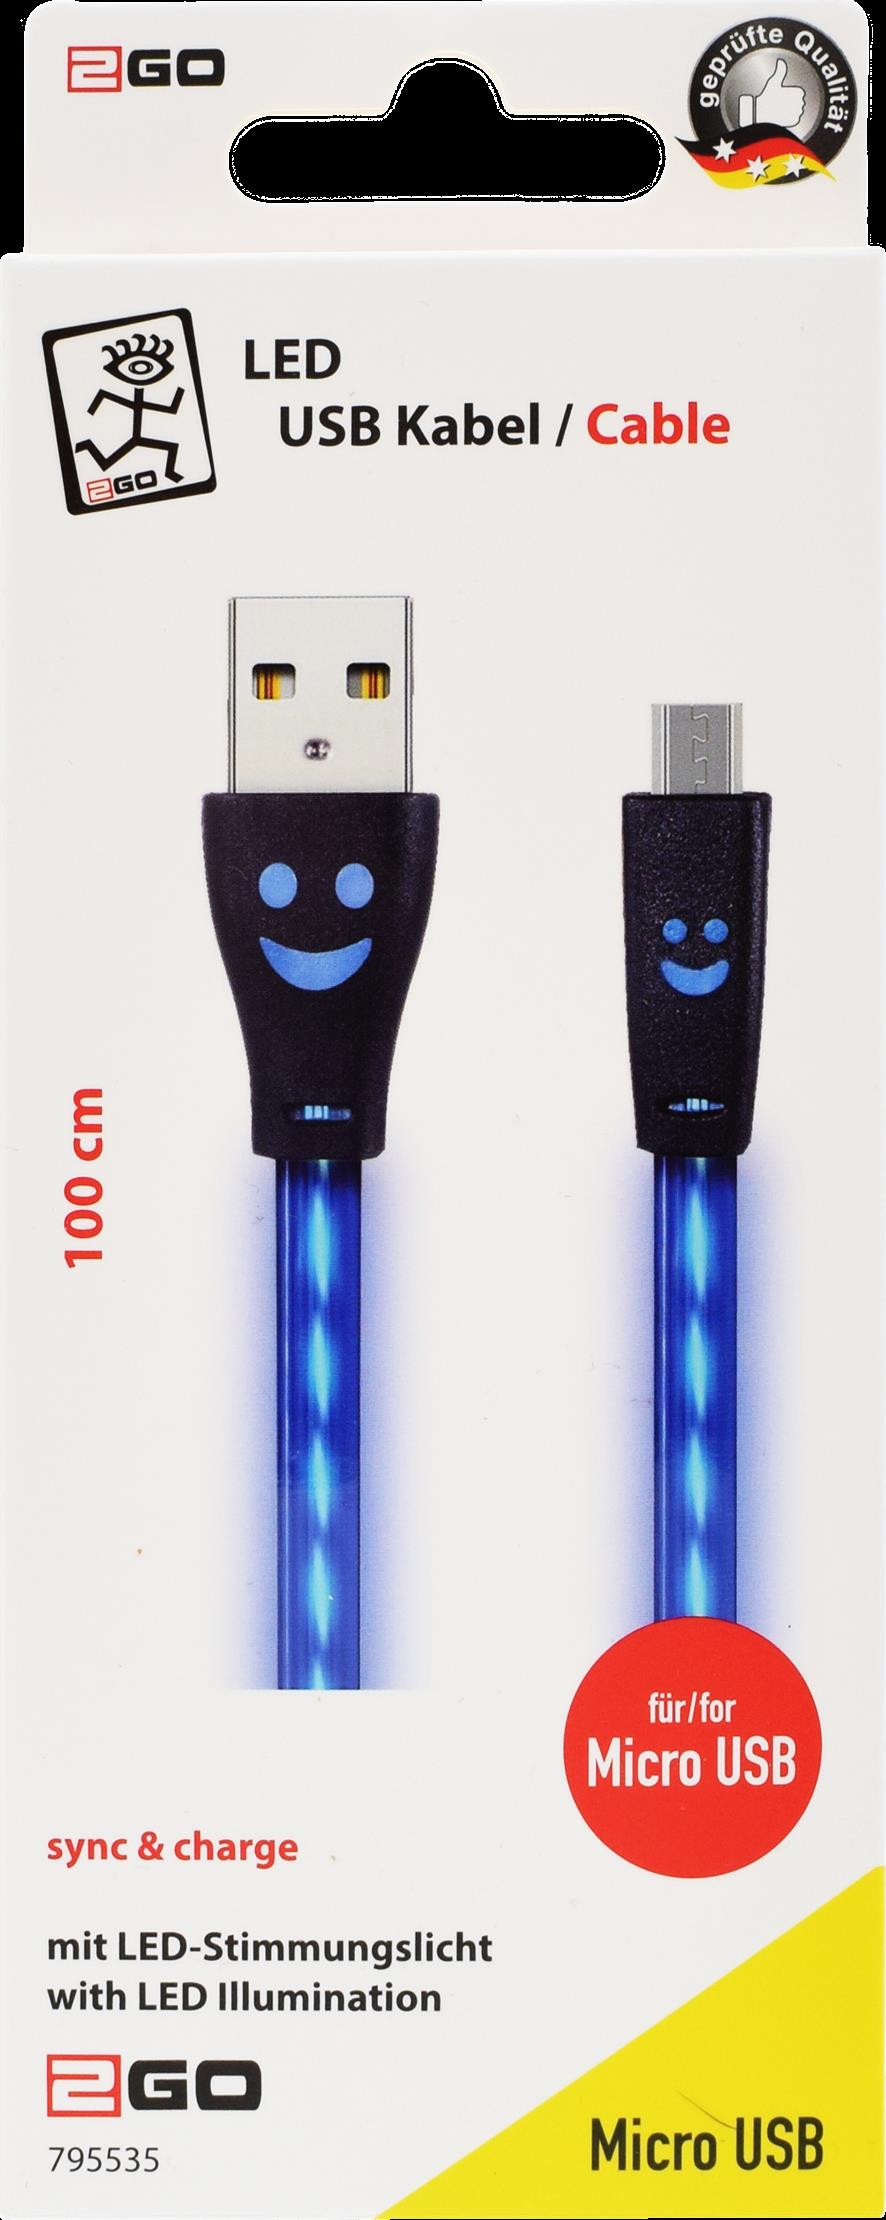 2GO Cable Micro-USB 1m LED